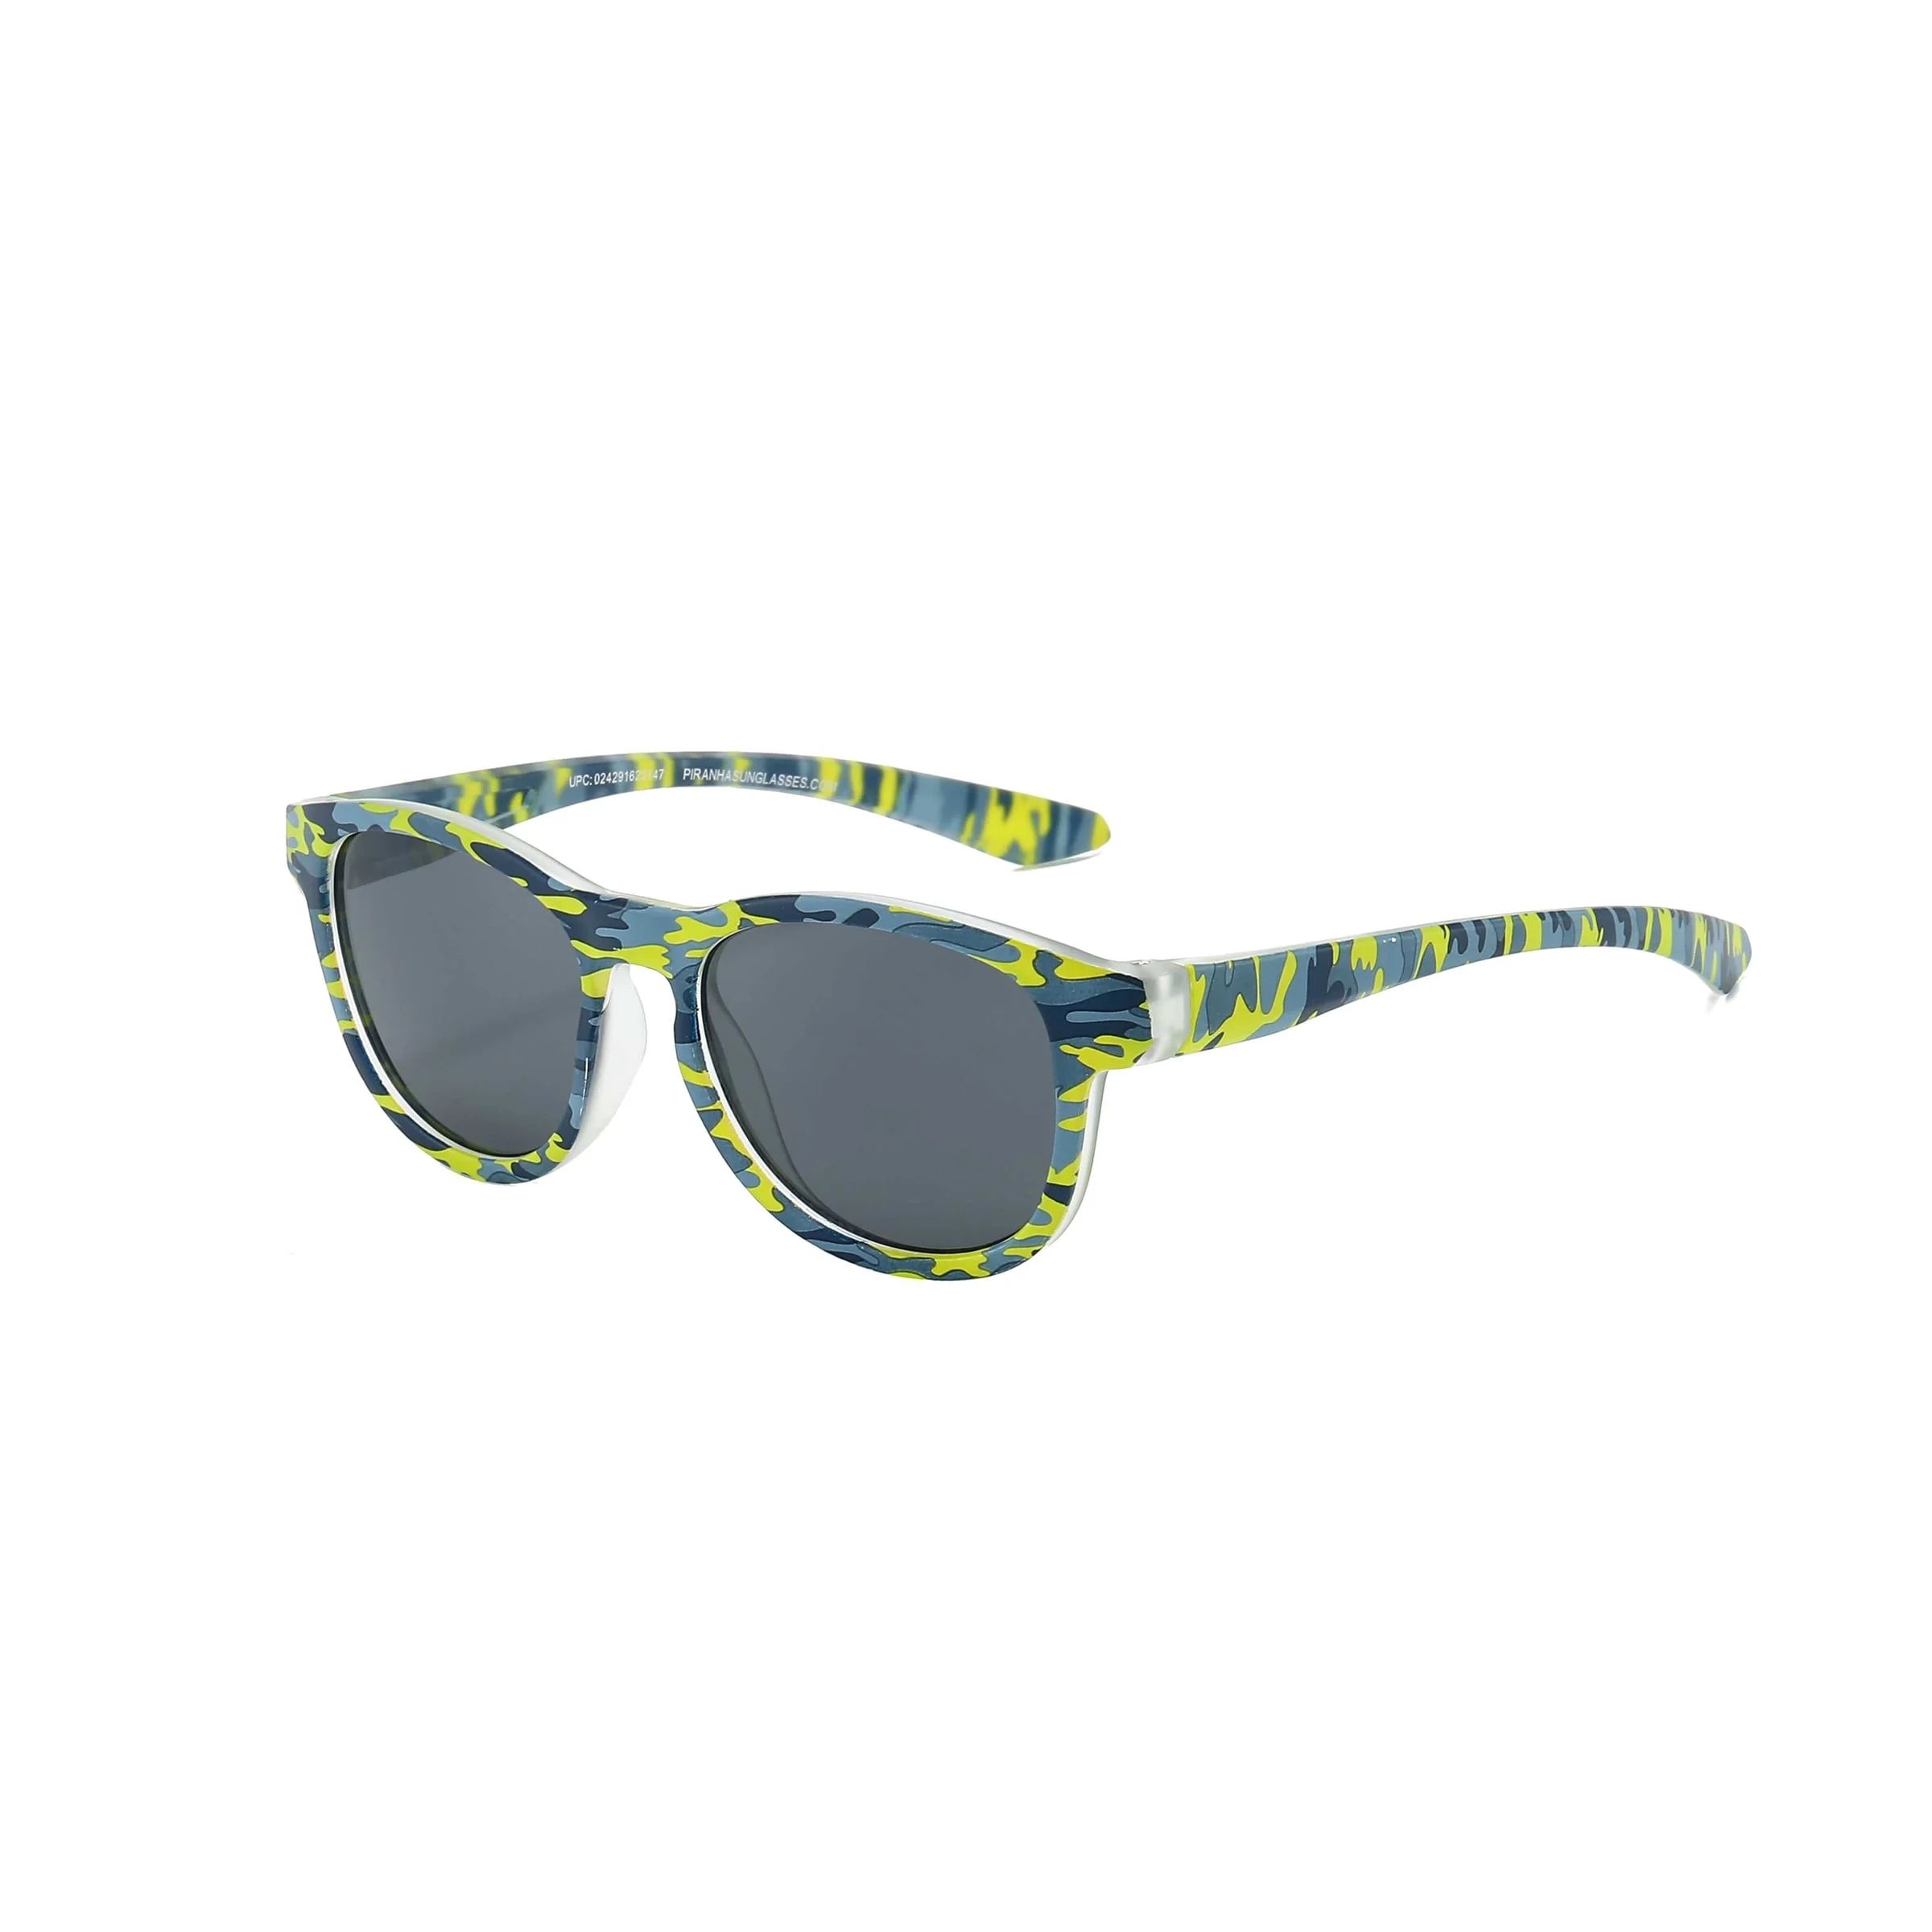 Piranha Eyewear Asher Camo Sunglasses for Kids Ages 4-10 | Walmart (US)